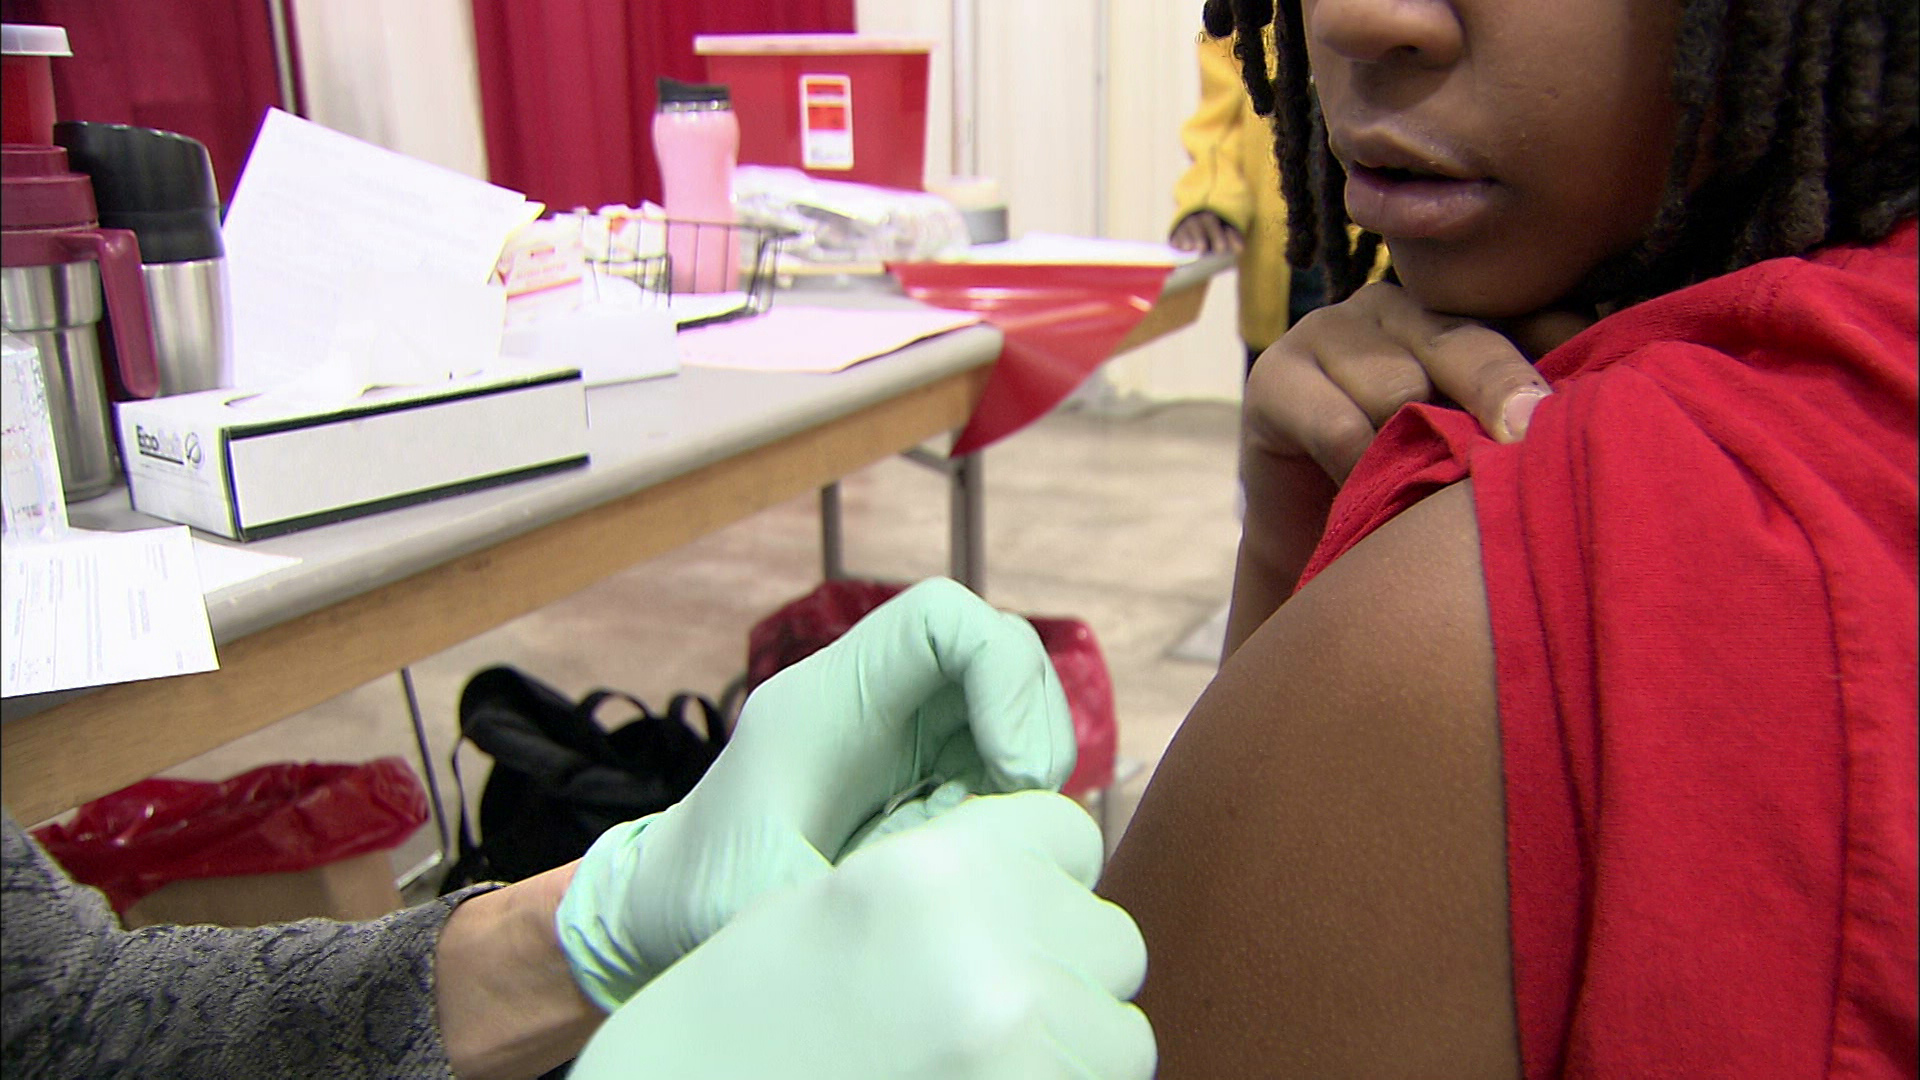 republican-lawmakers-ready-to-block-student-vaccine-mandates-for-meningitis-chickenpox